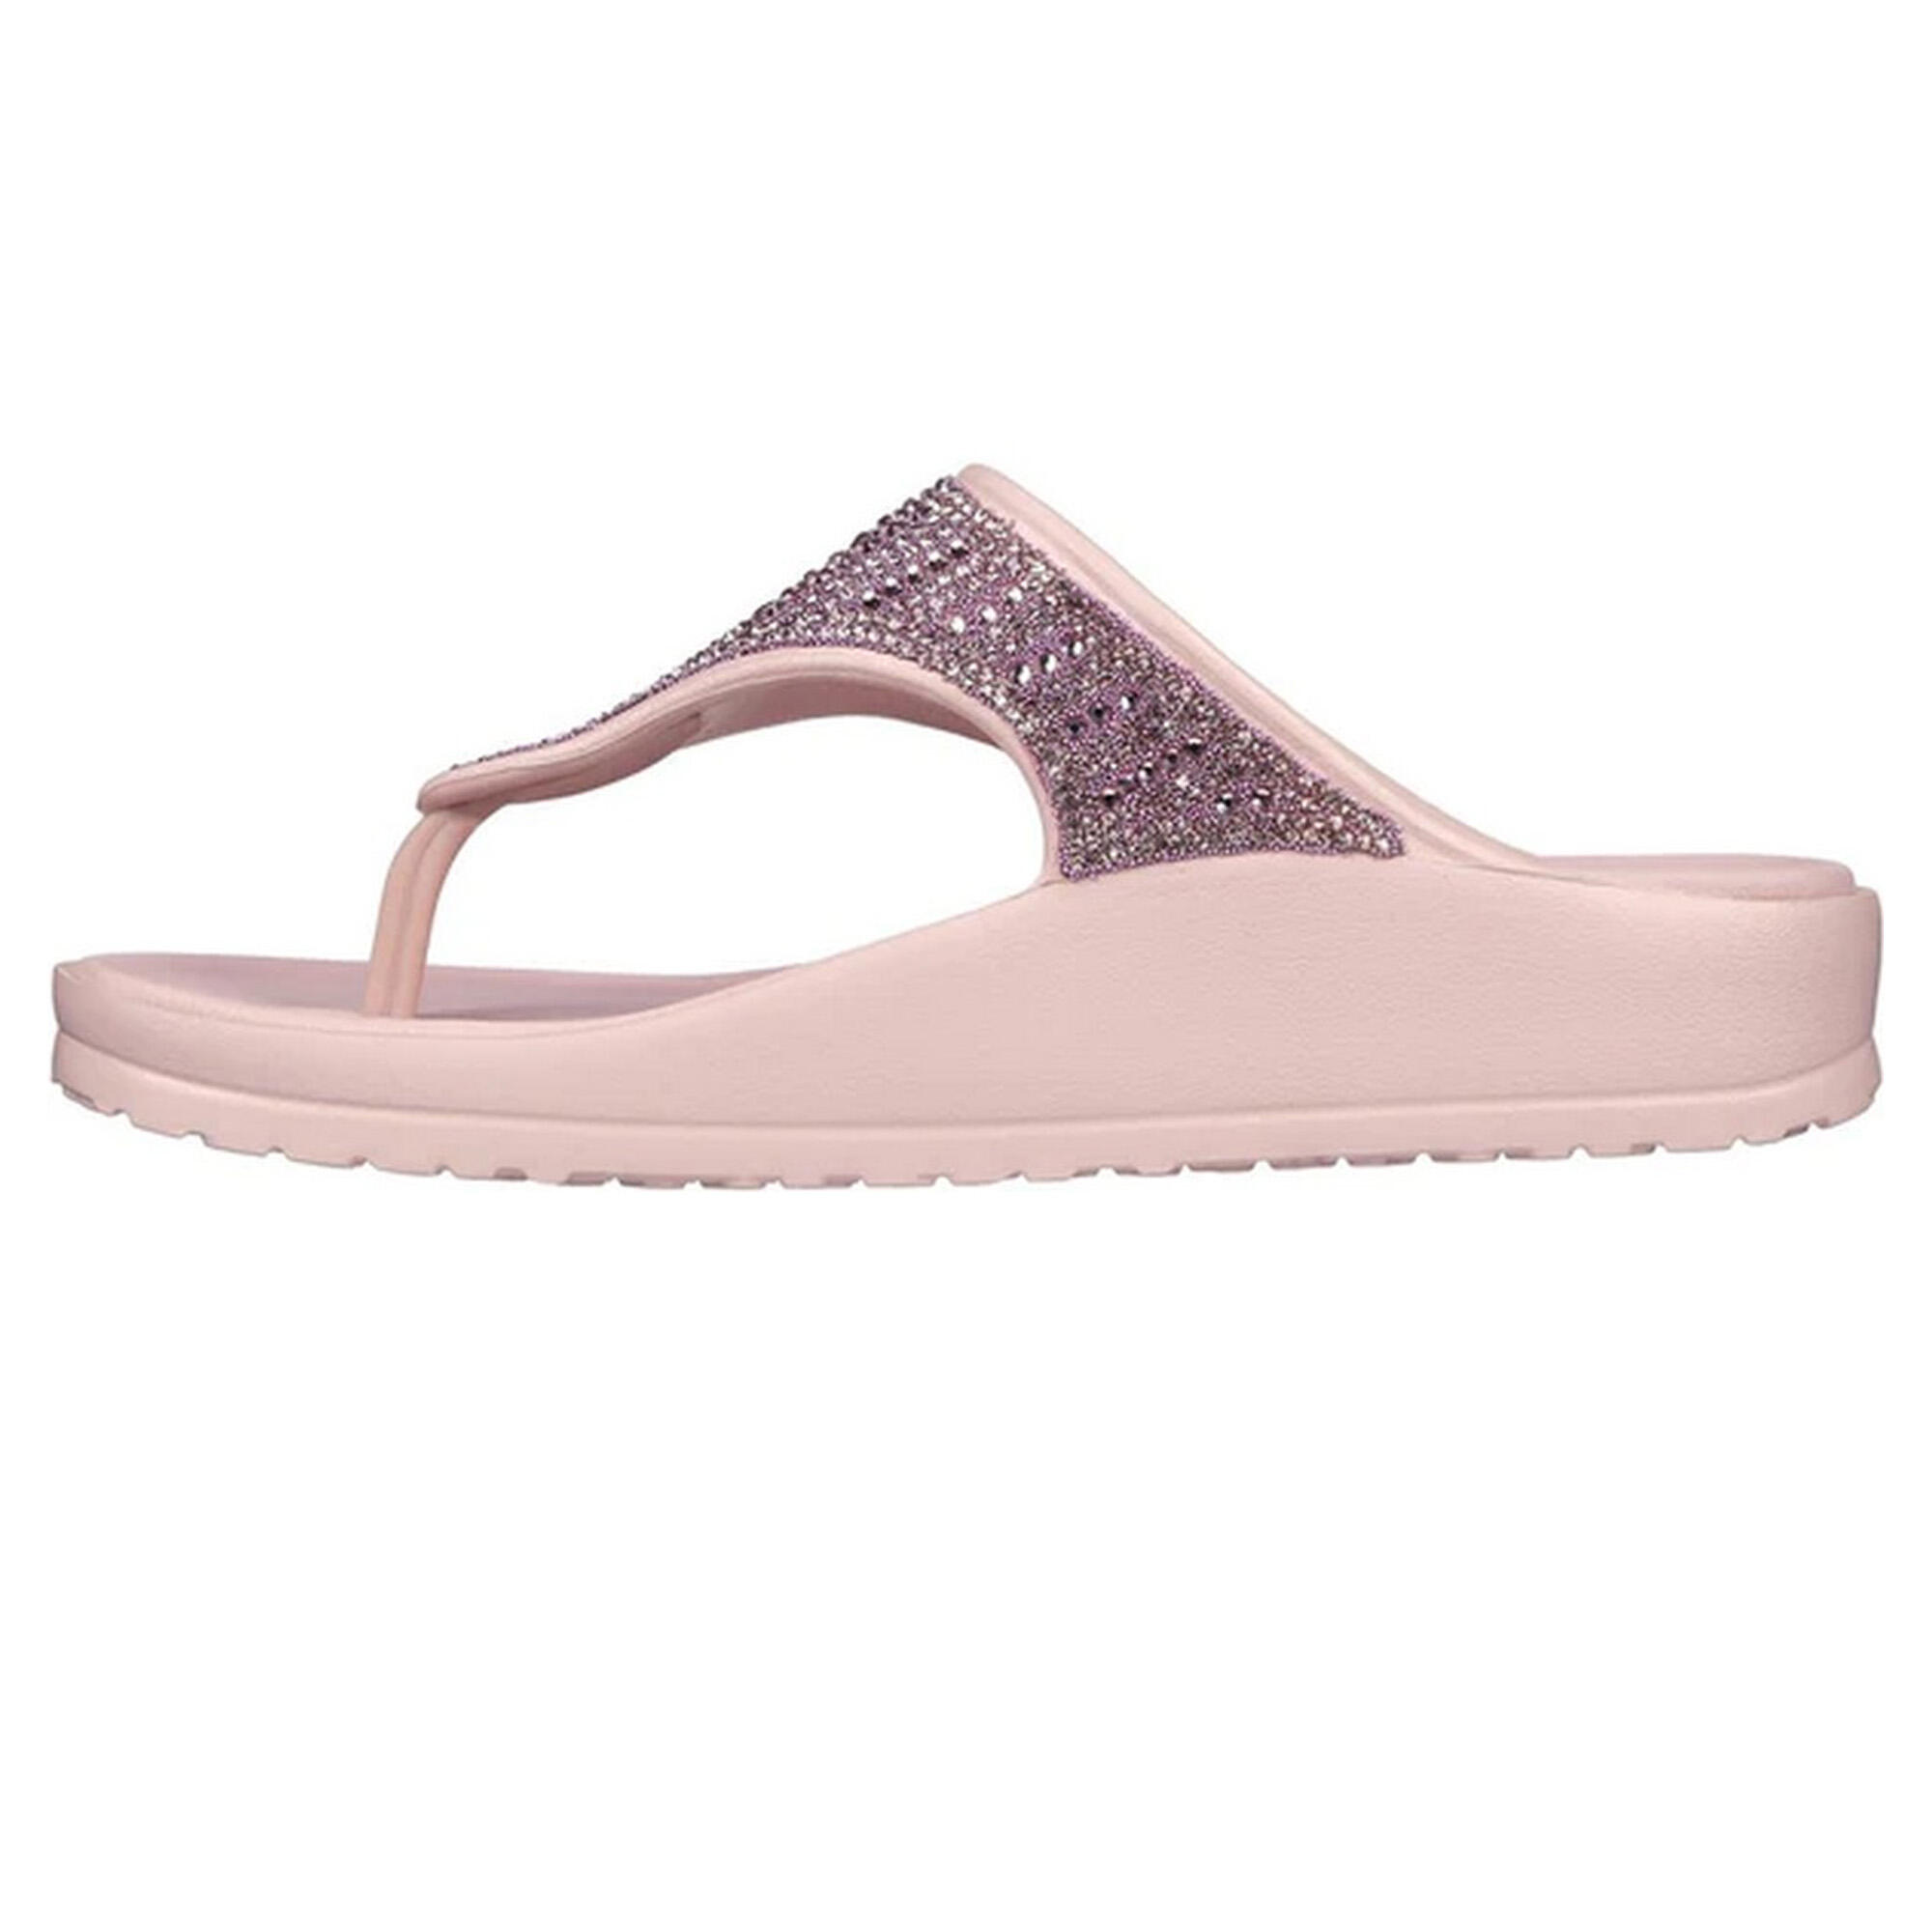 Womens/Ladies Cali Breeze 2.0 Love Glimmer Sandals (Mauve) 2/5